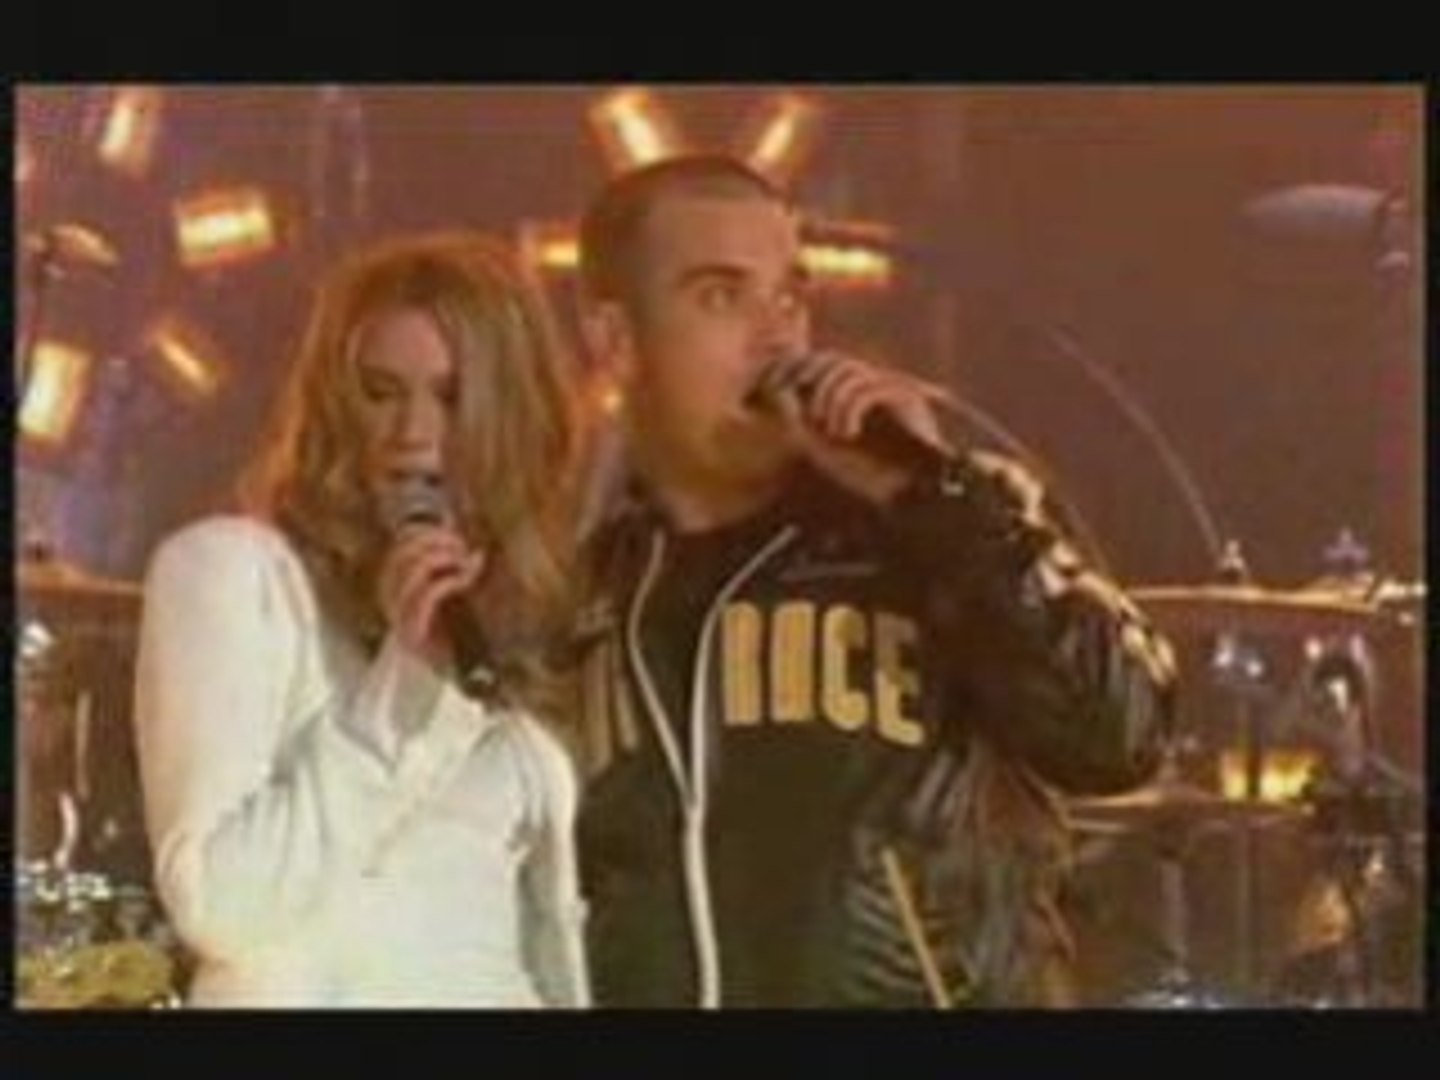 Robbie Williams & Joss Stone - Angels (Live 2005) - video Dailymotion